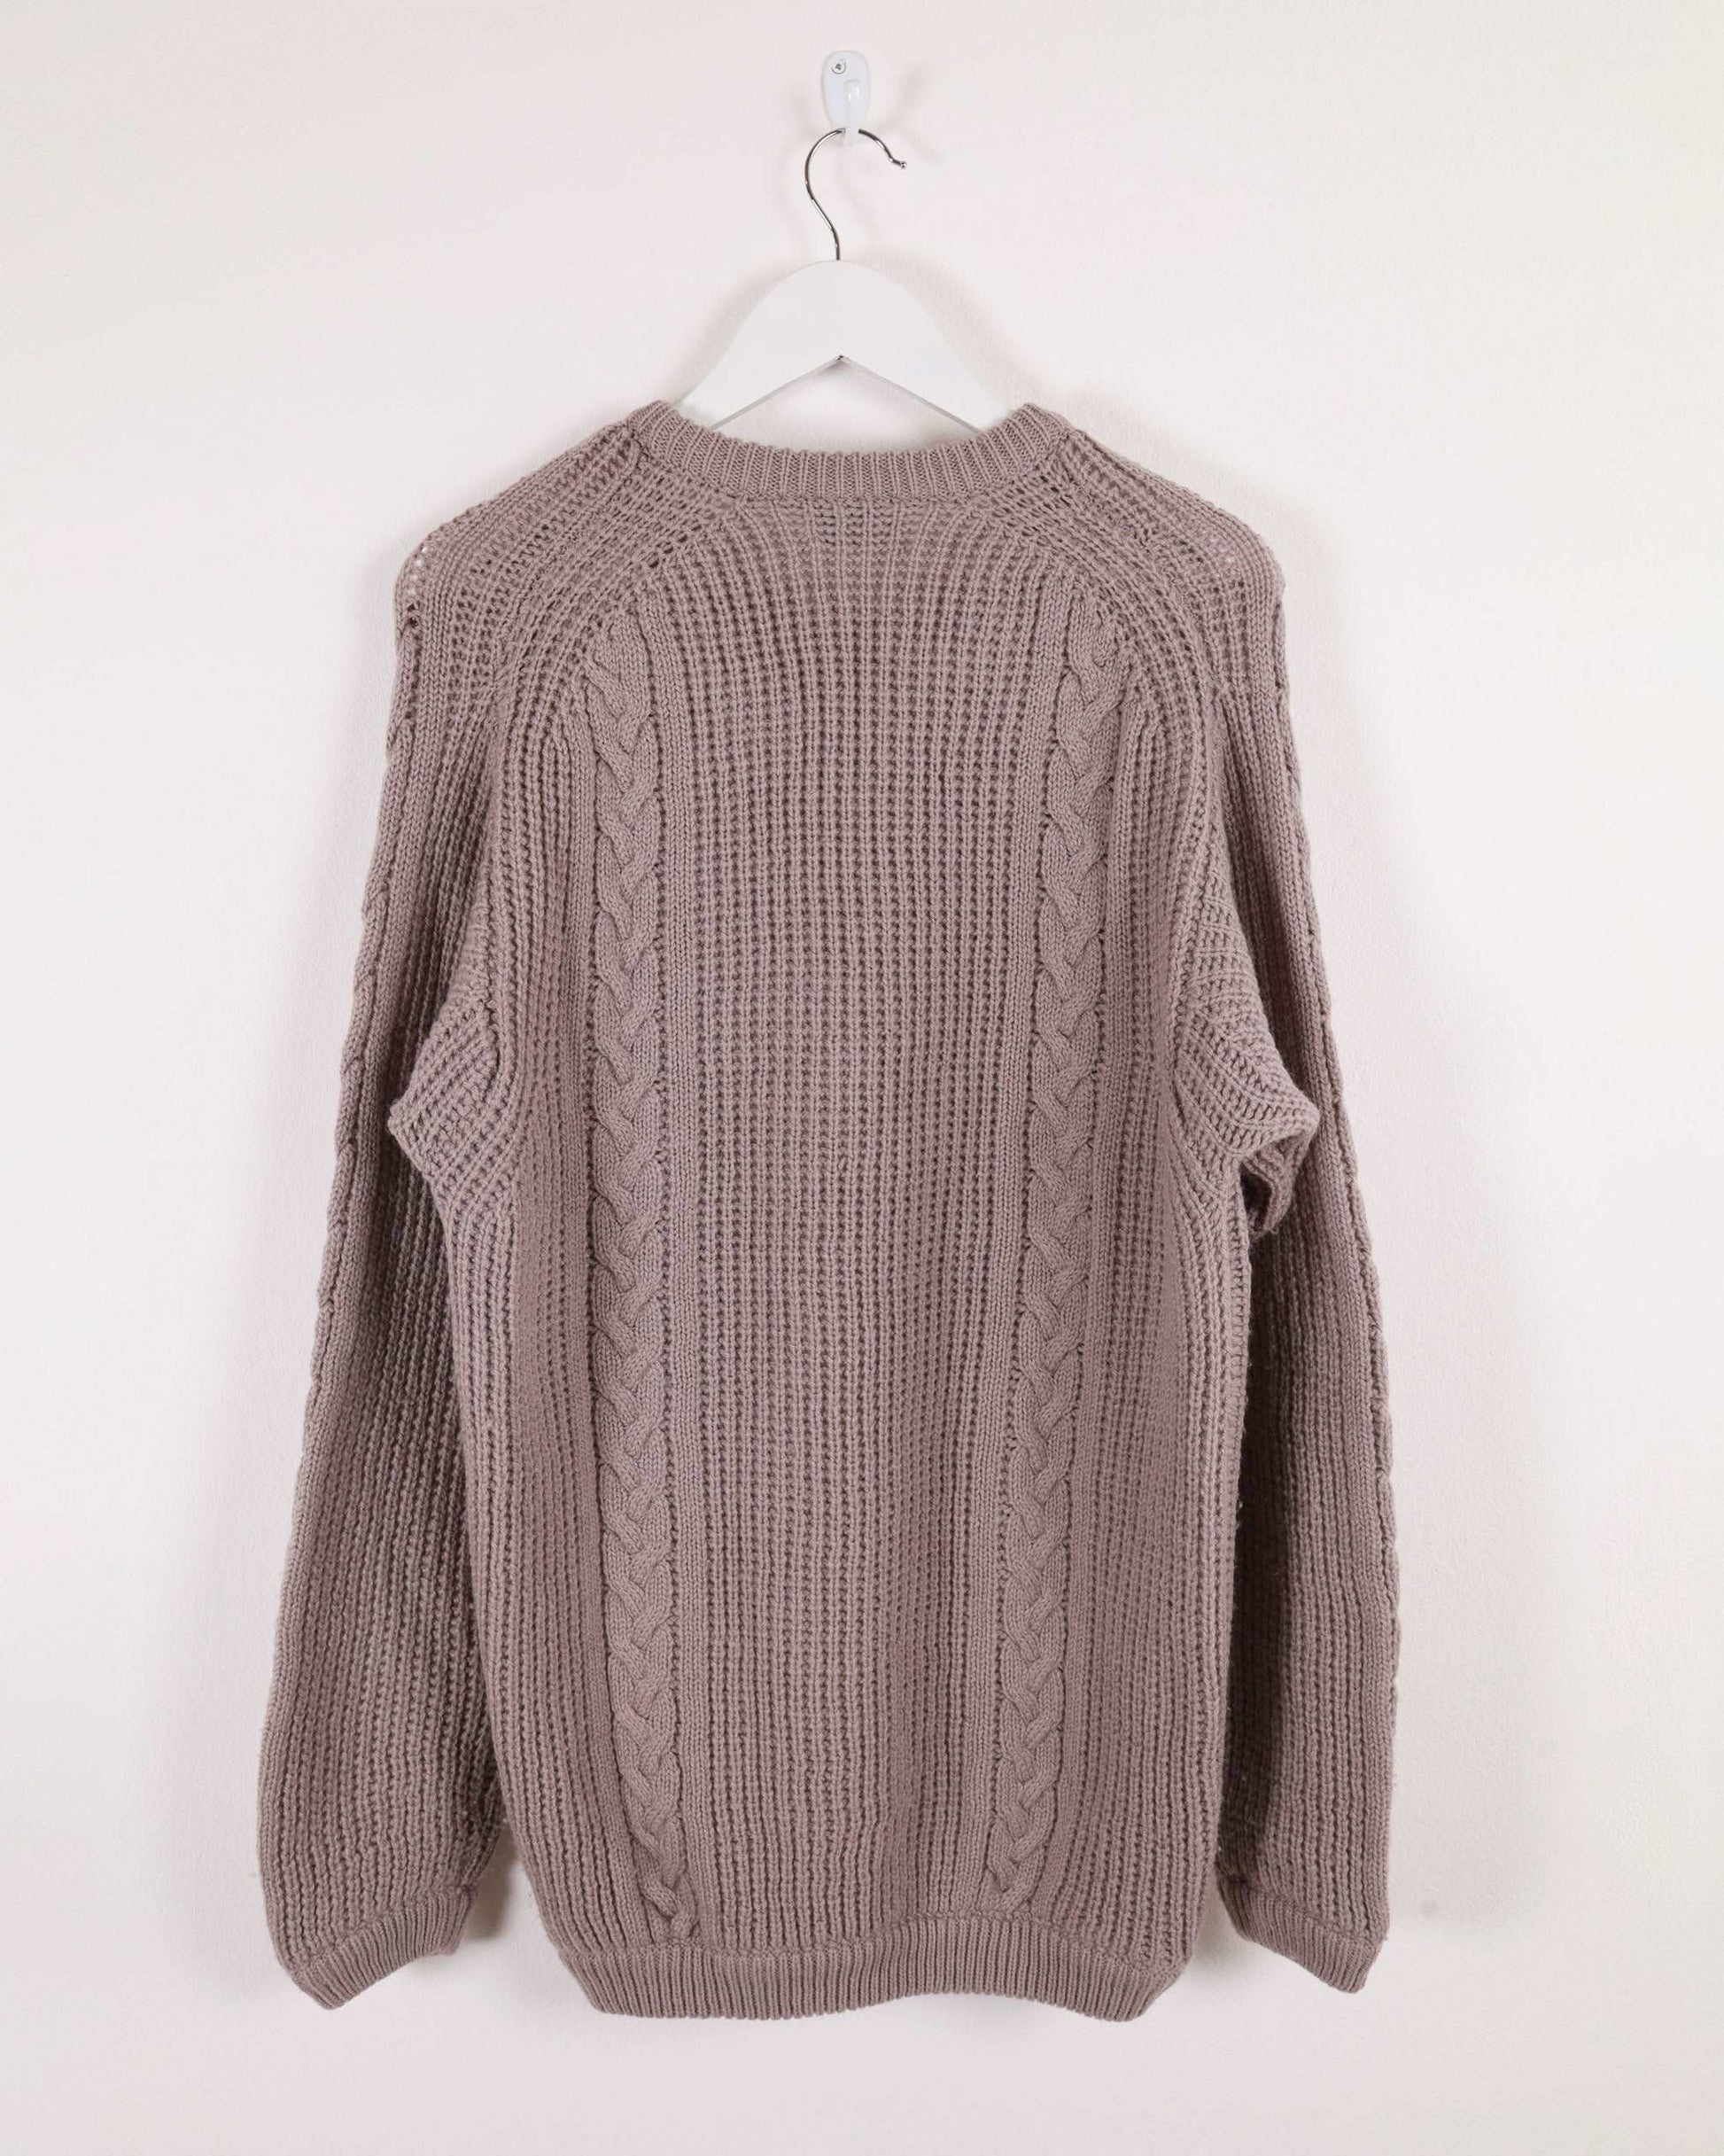 Vintage Carrera knit Sweater